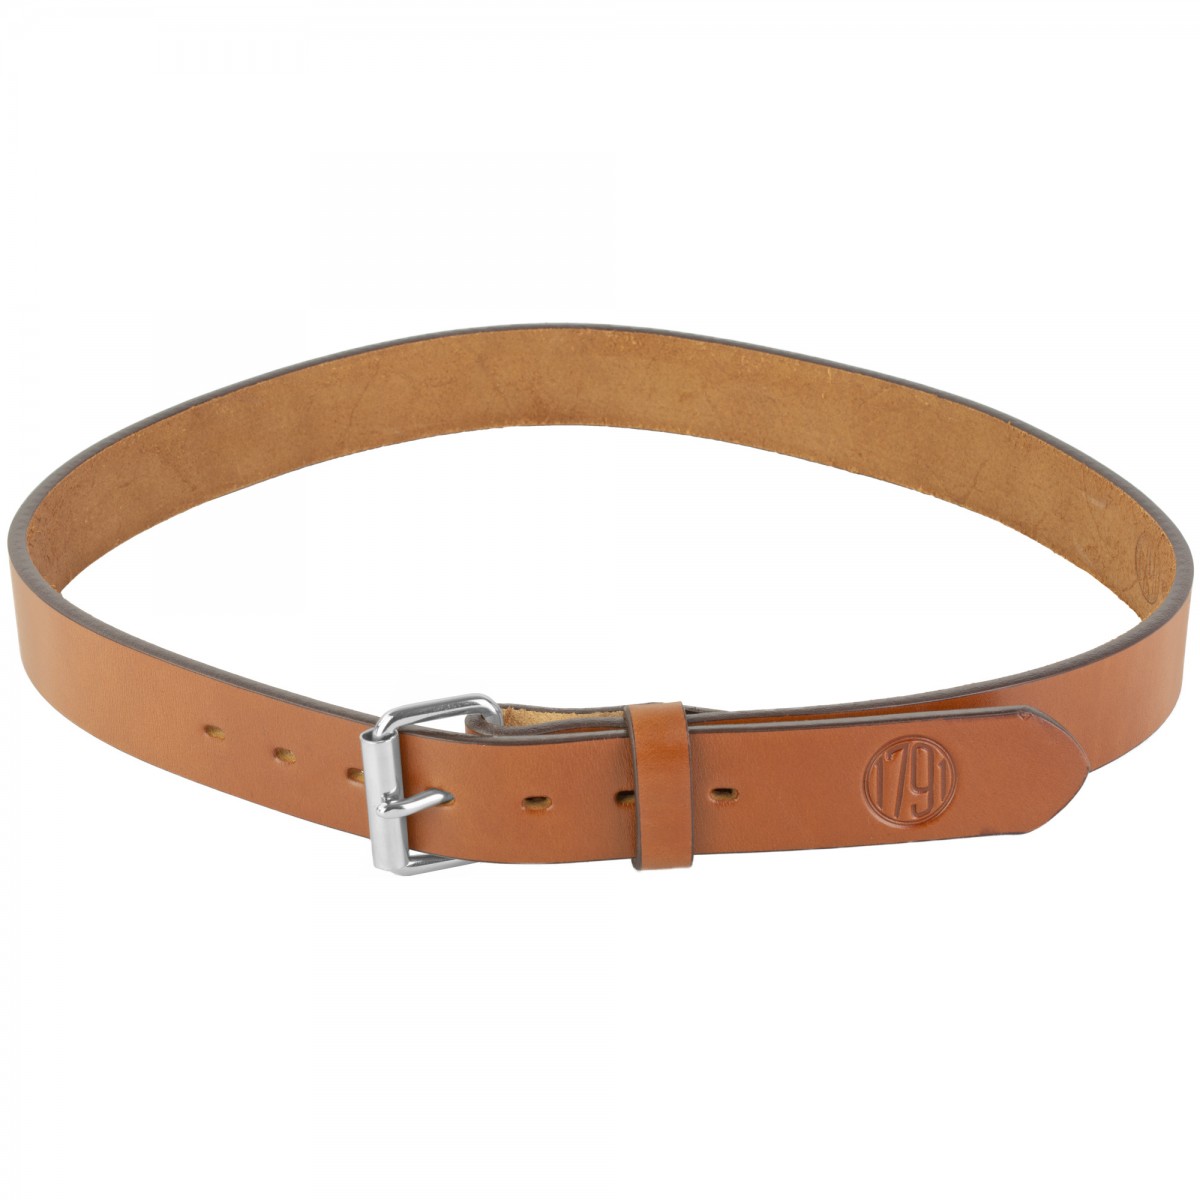 1791 Leather Gun Belt – Classic Brown